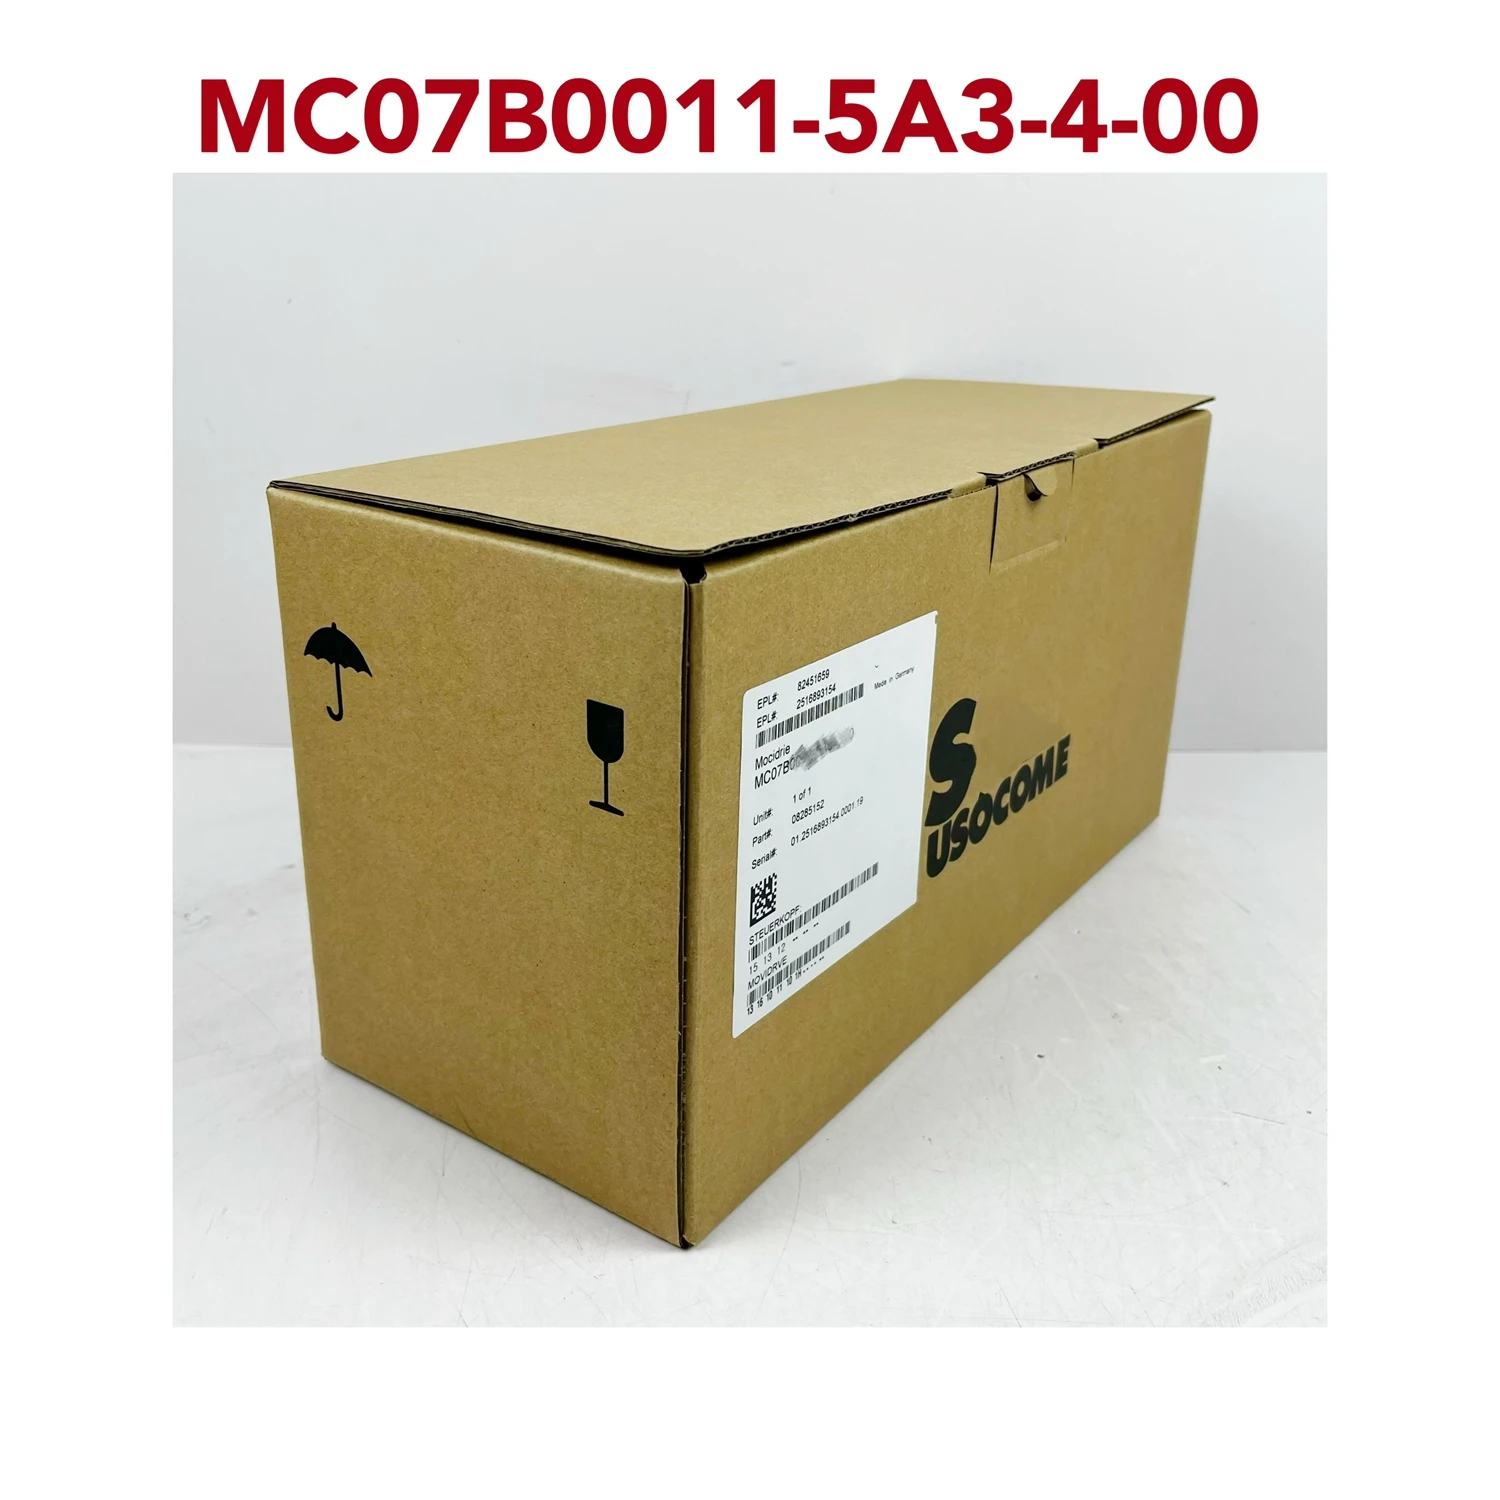 

NEW MC07B0011-5A3-4-00 in box fast ship